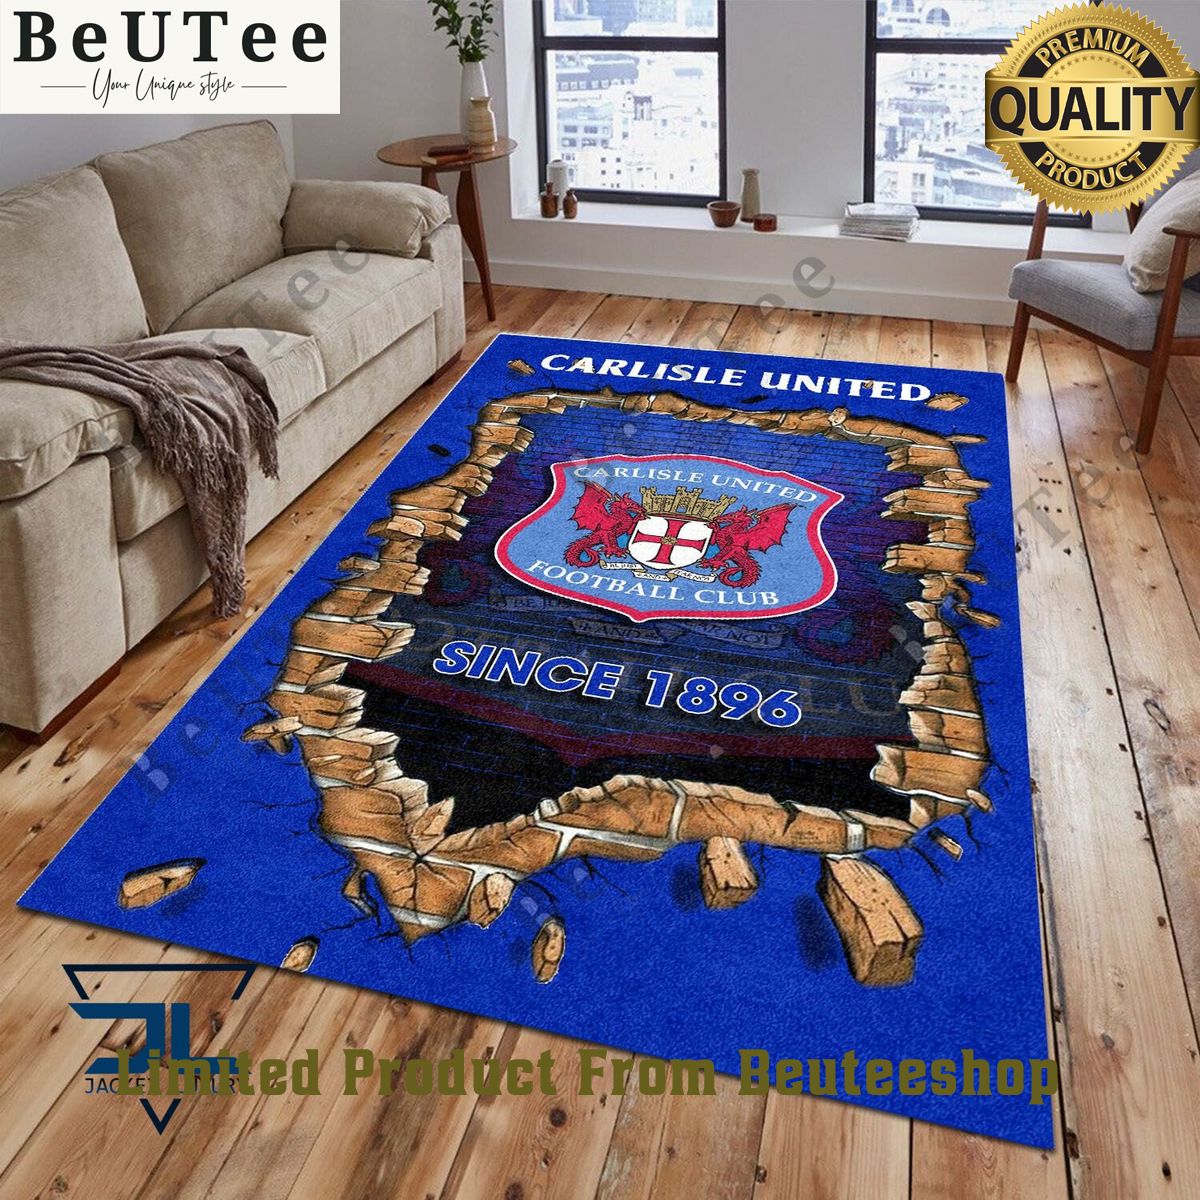 epl carlisle united 1824 premier league limited rug carpet 1 4Hzdx.jpg